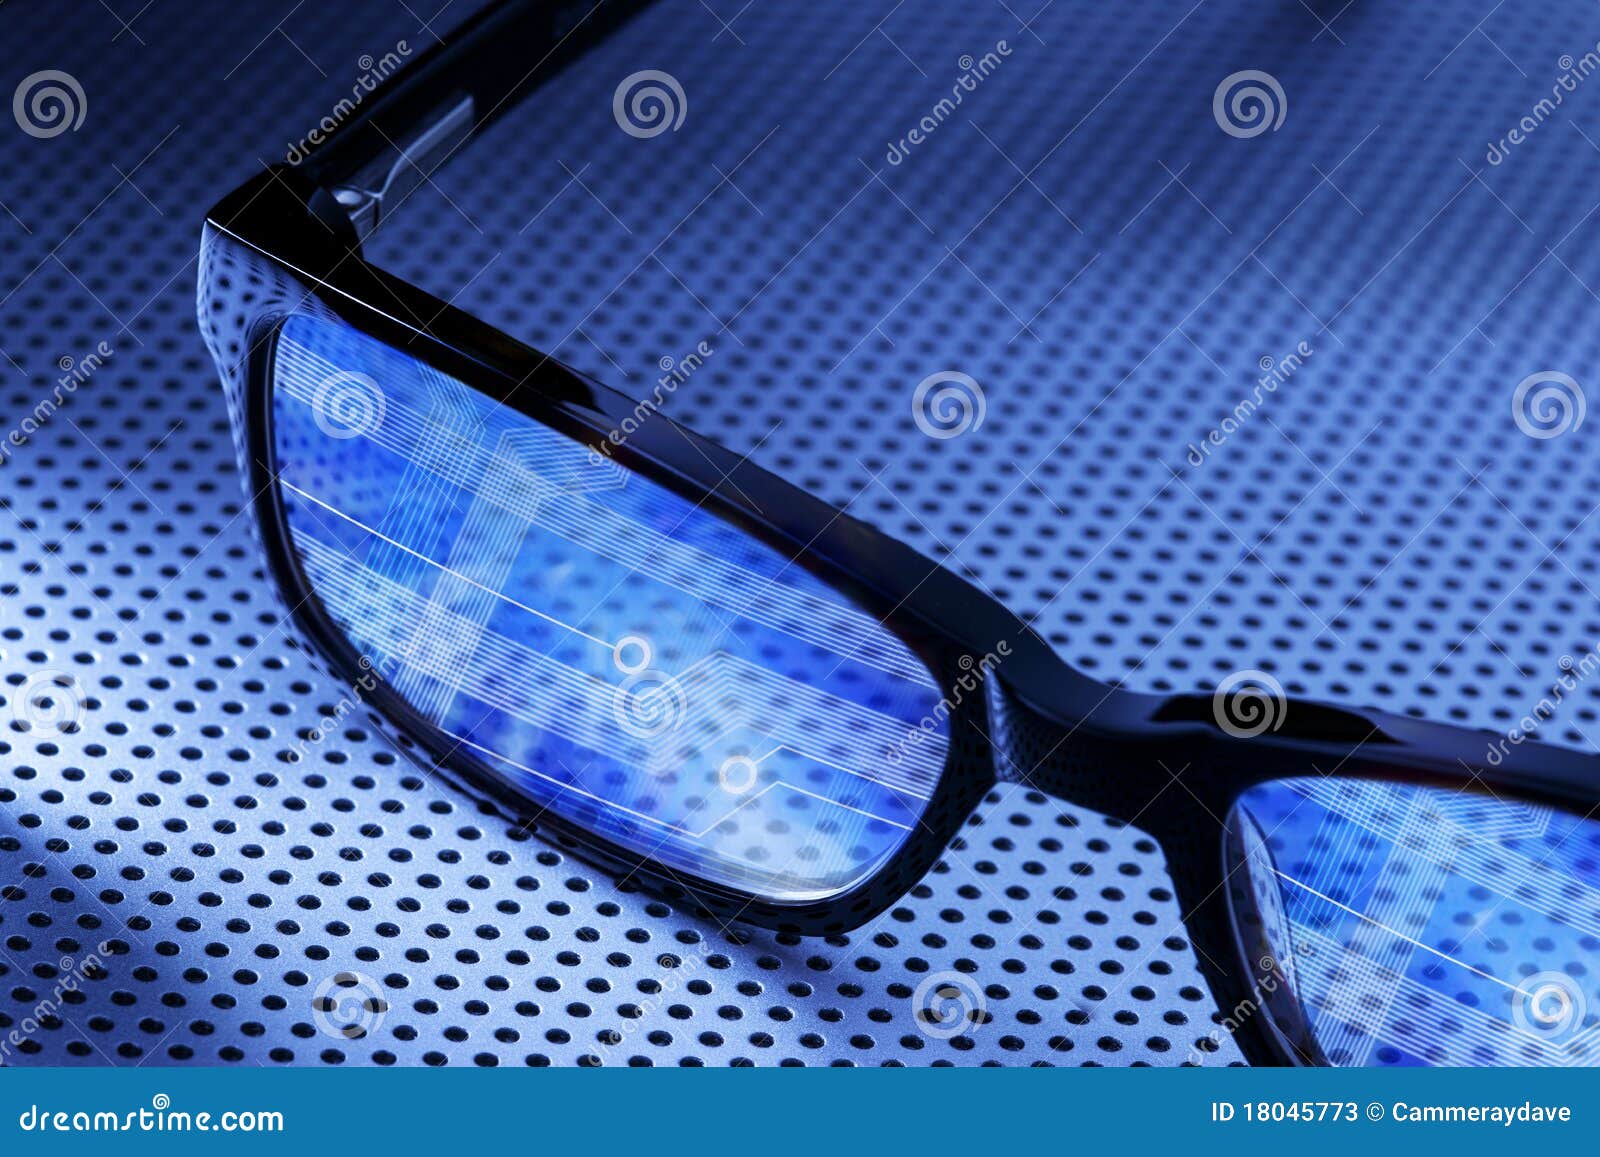 digital computer smart glasses